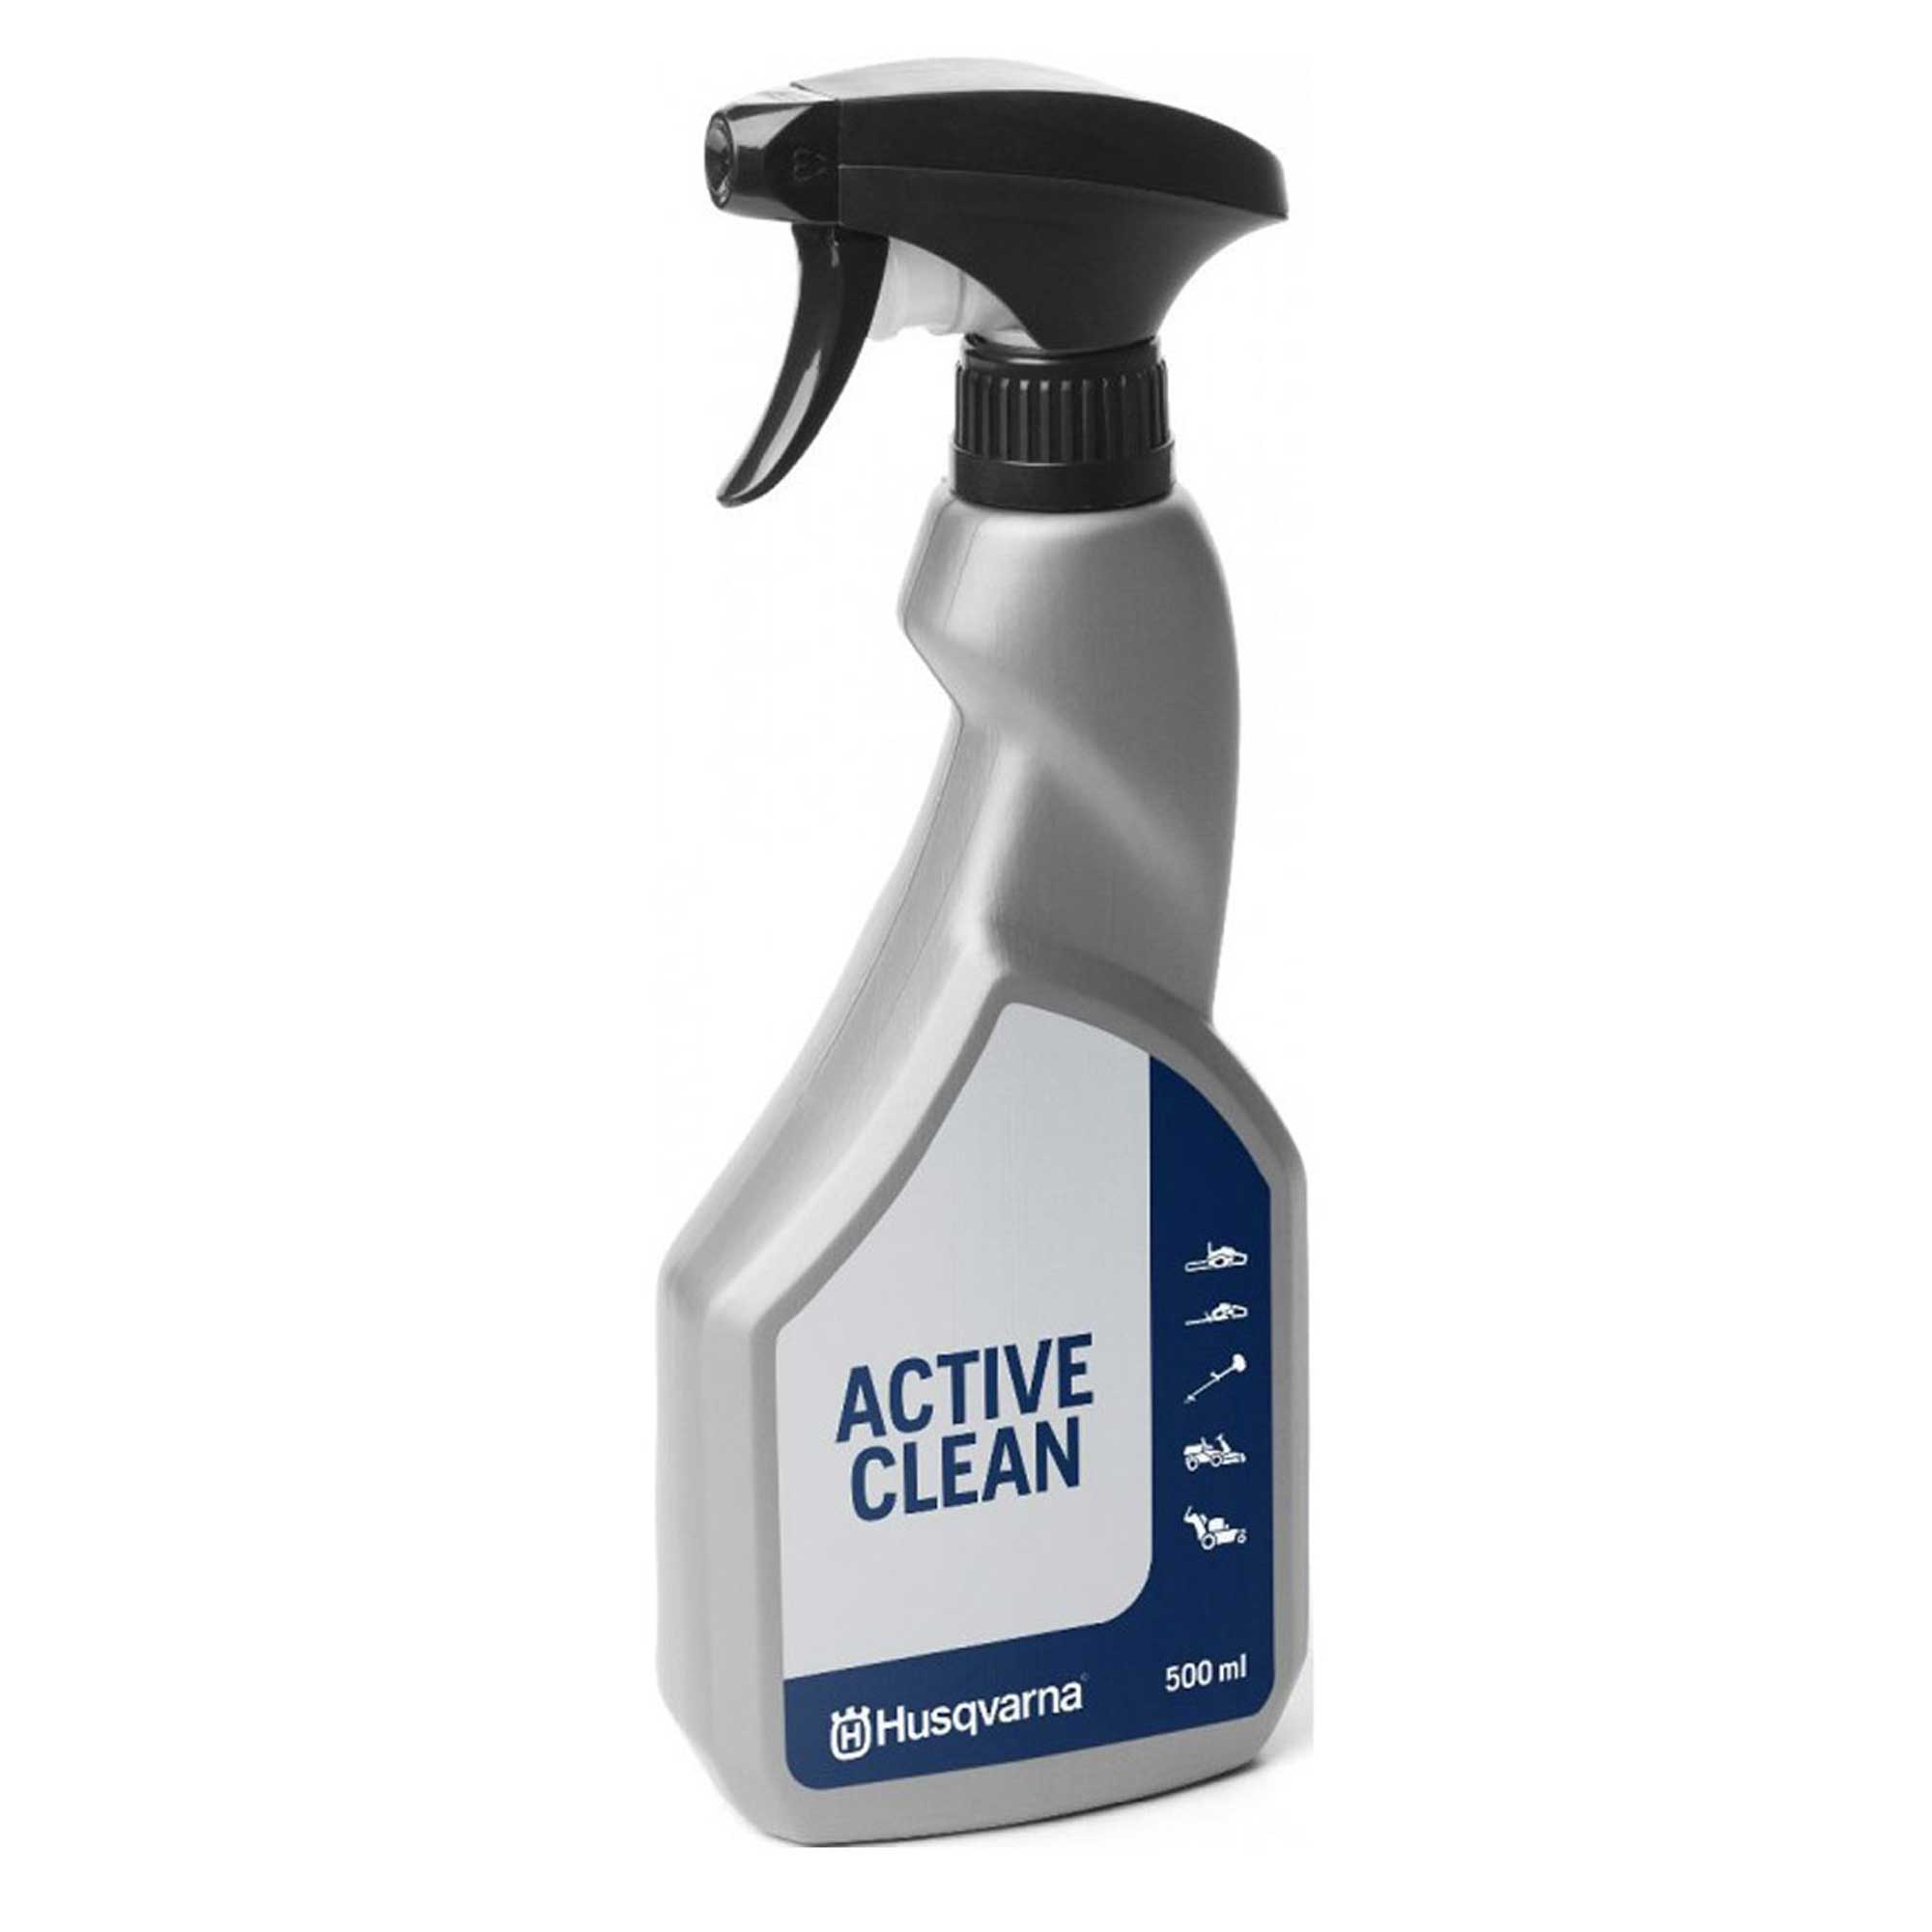 active_clean.jpg